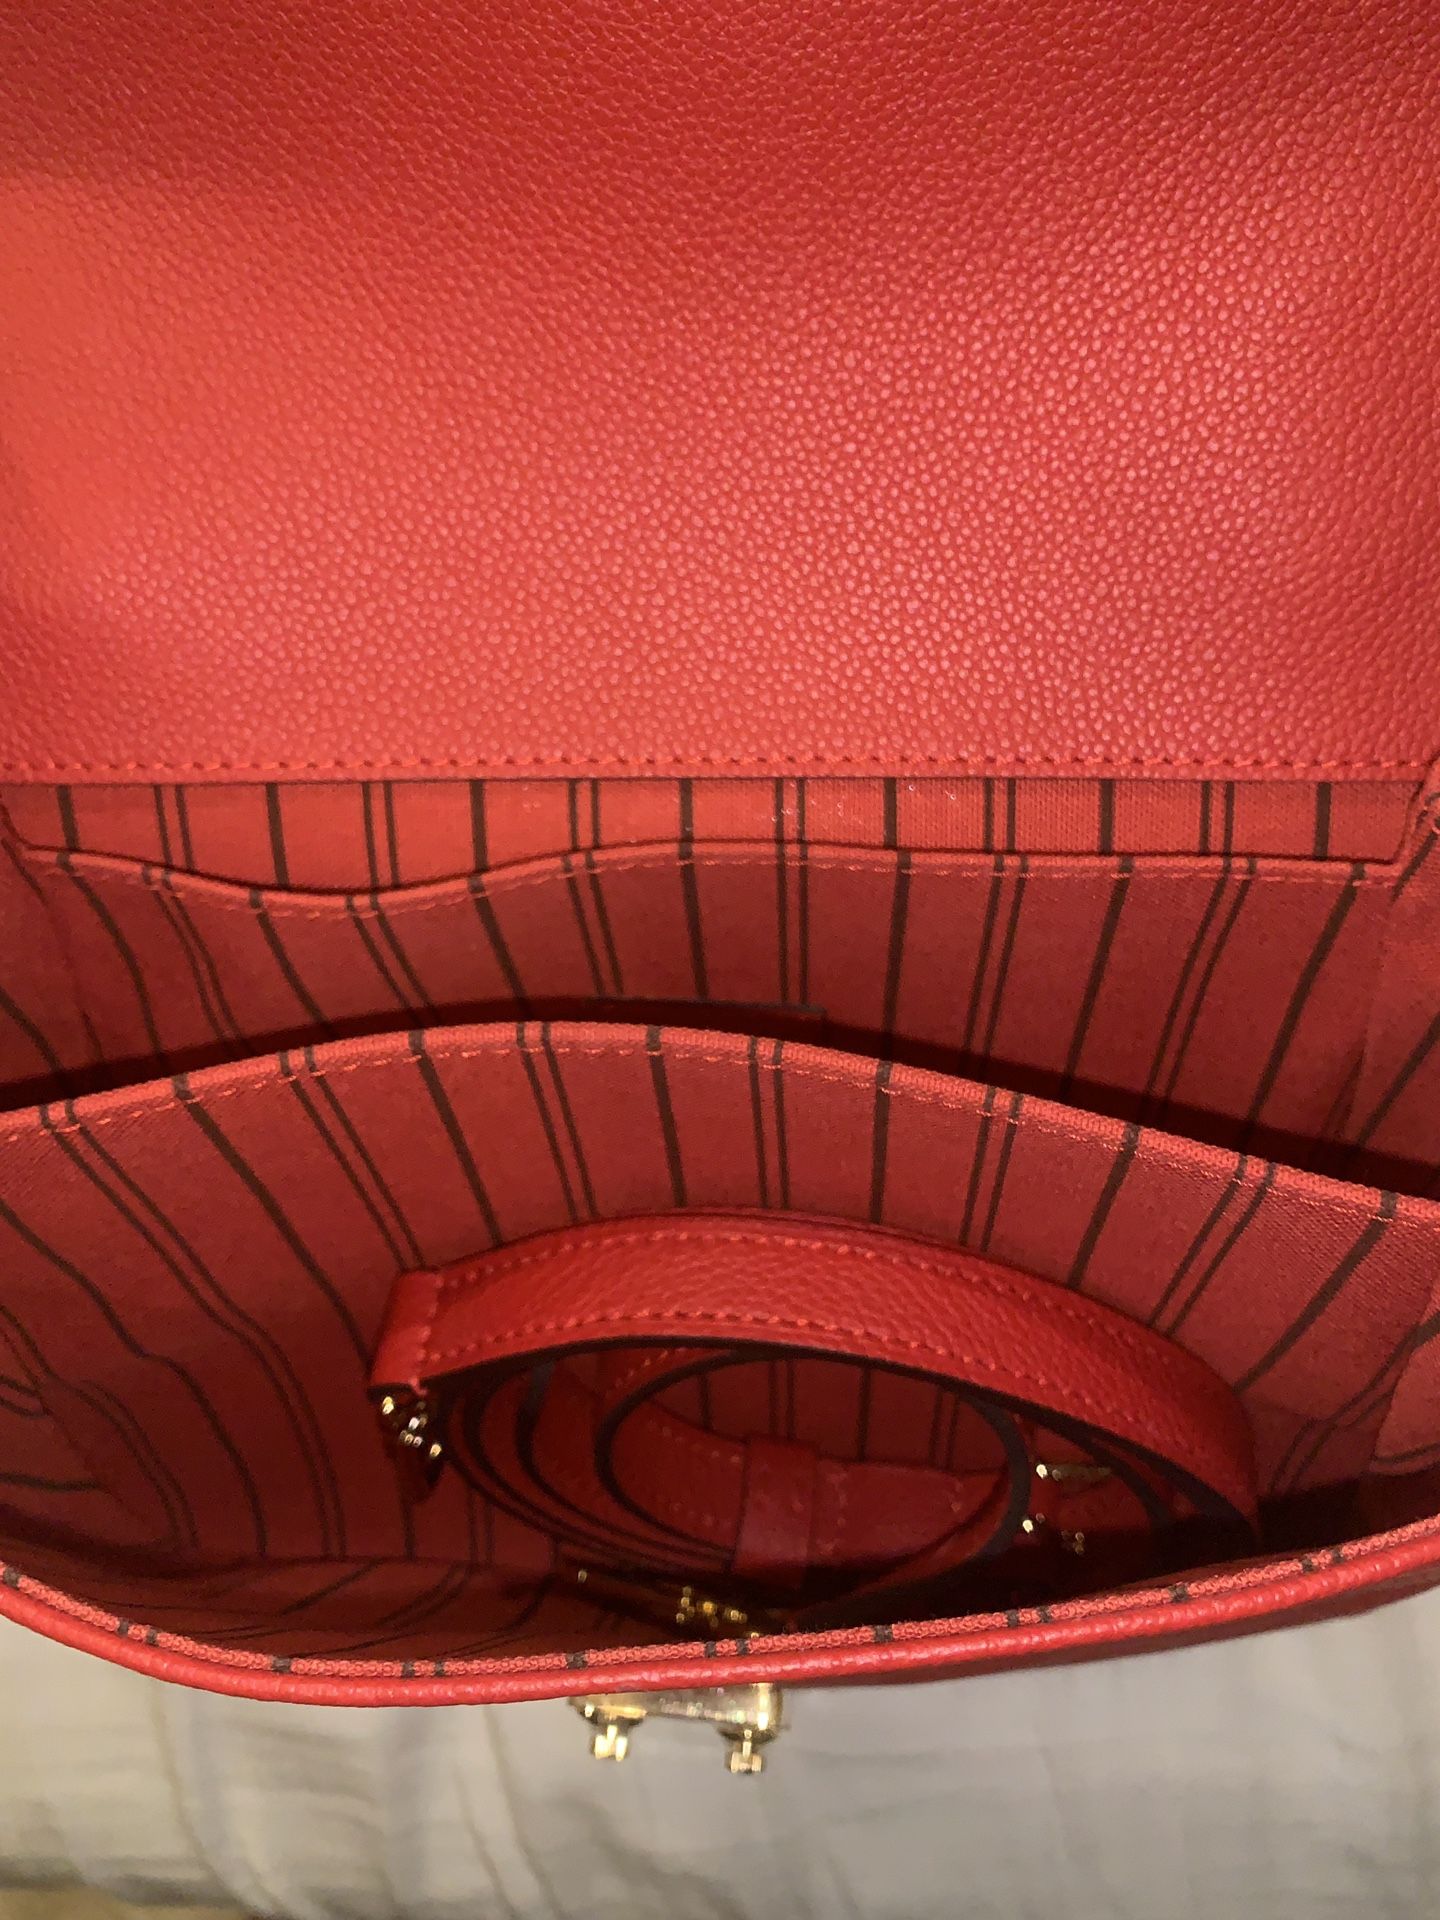 Louis Vuitton Félicie Pochette in Red